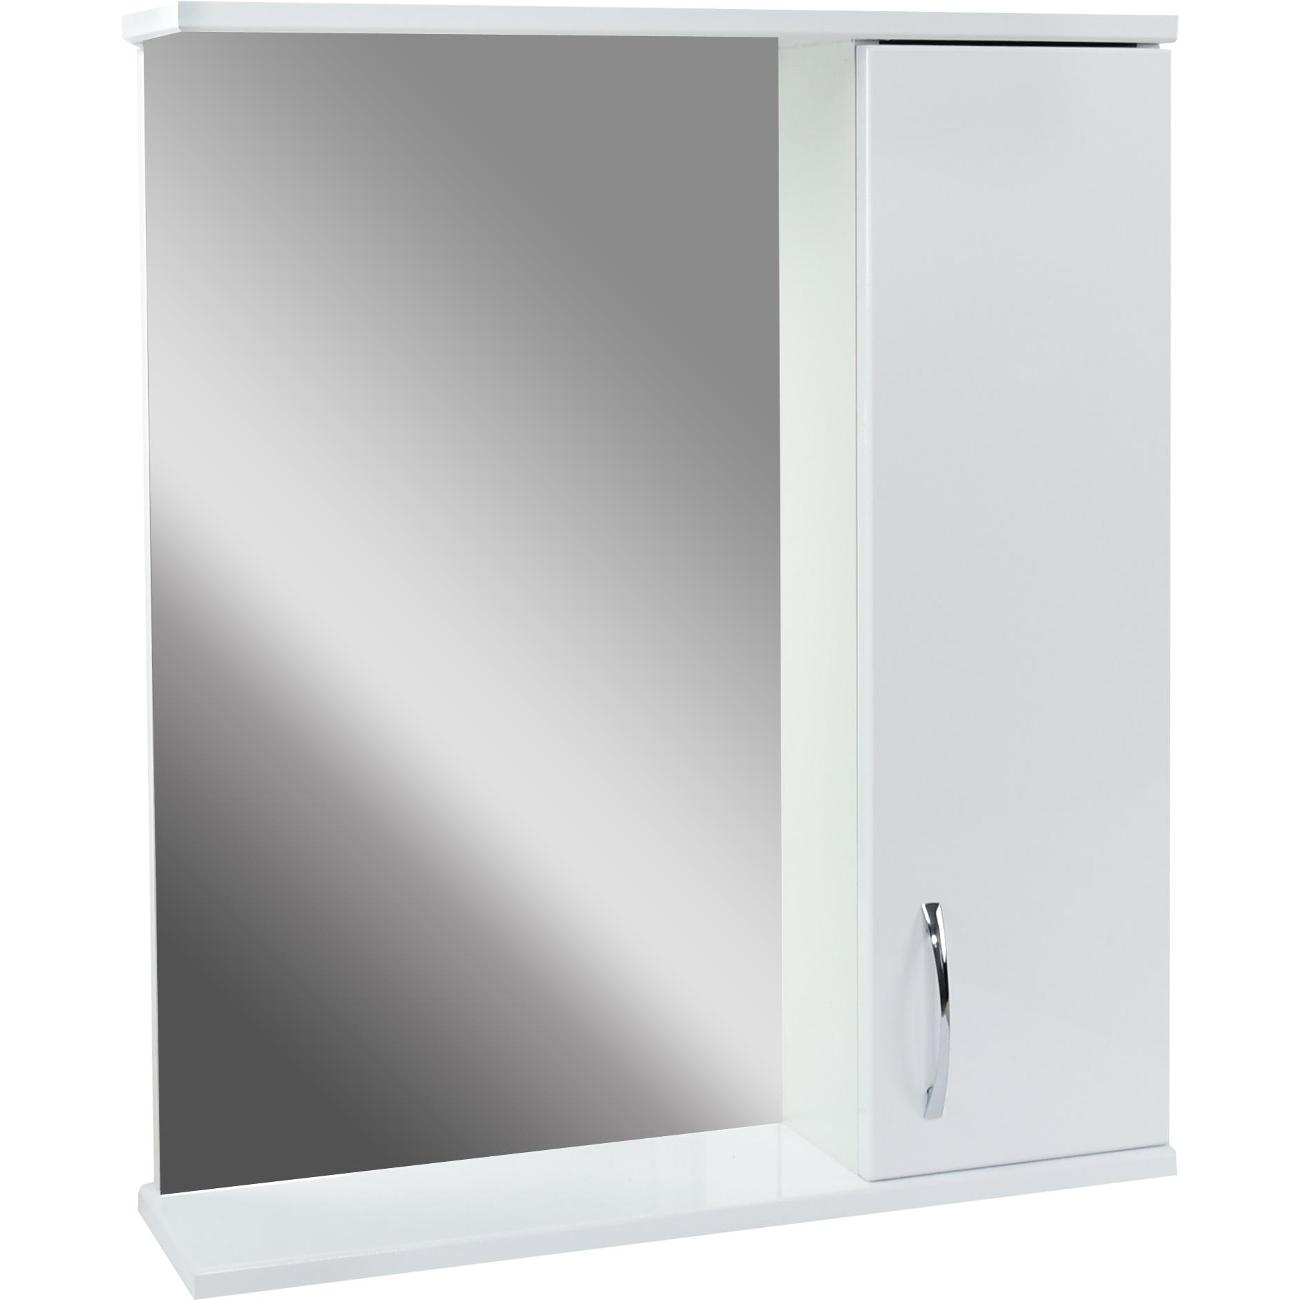 Зеркальный шкаф с подсветкой 80 см белый глянец am pm spirit m70mcx0801wg